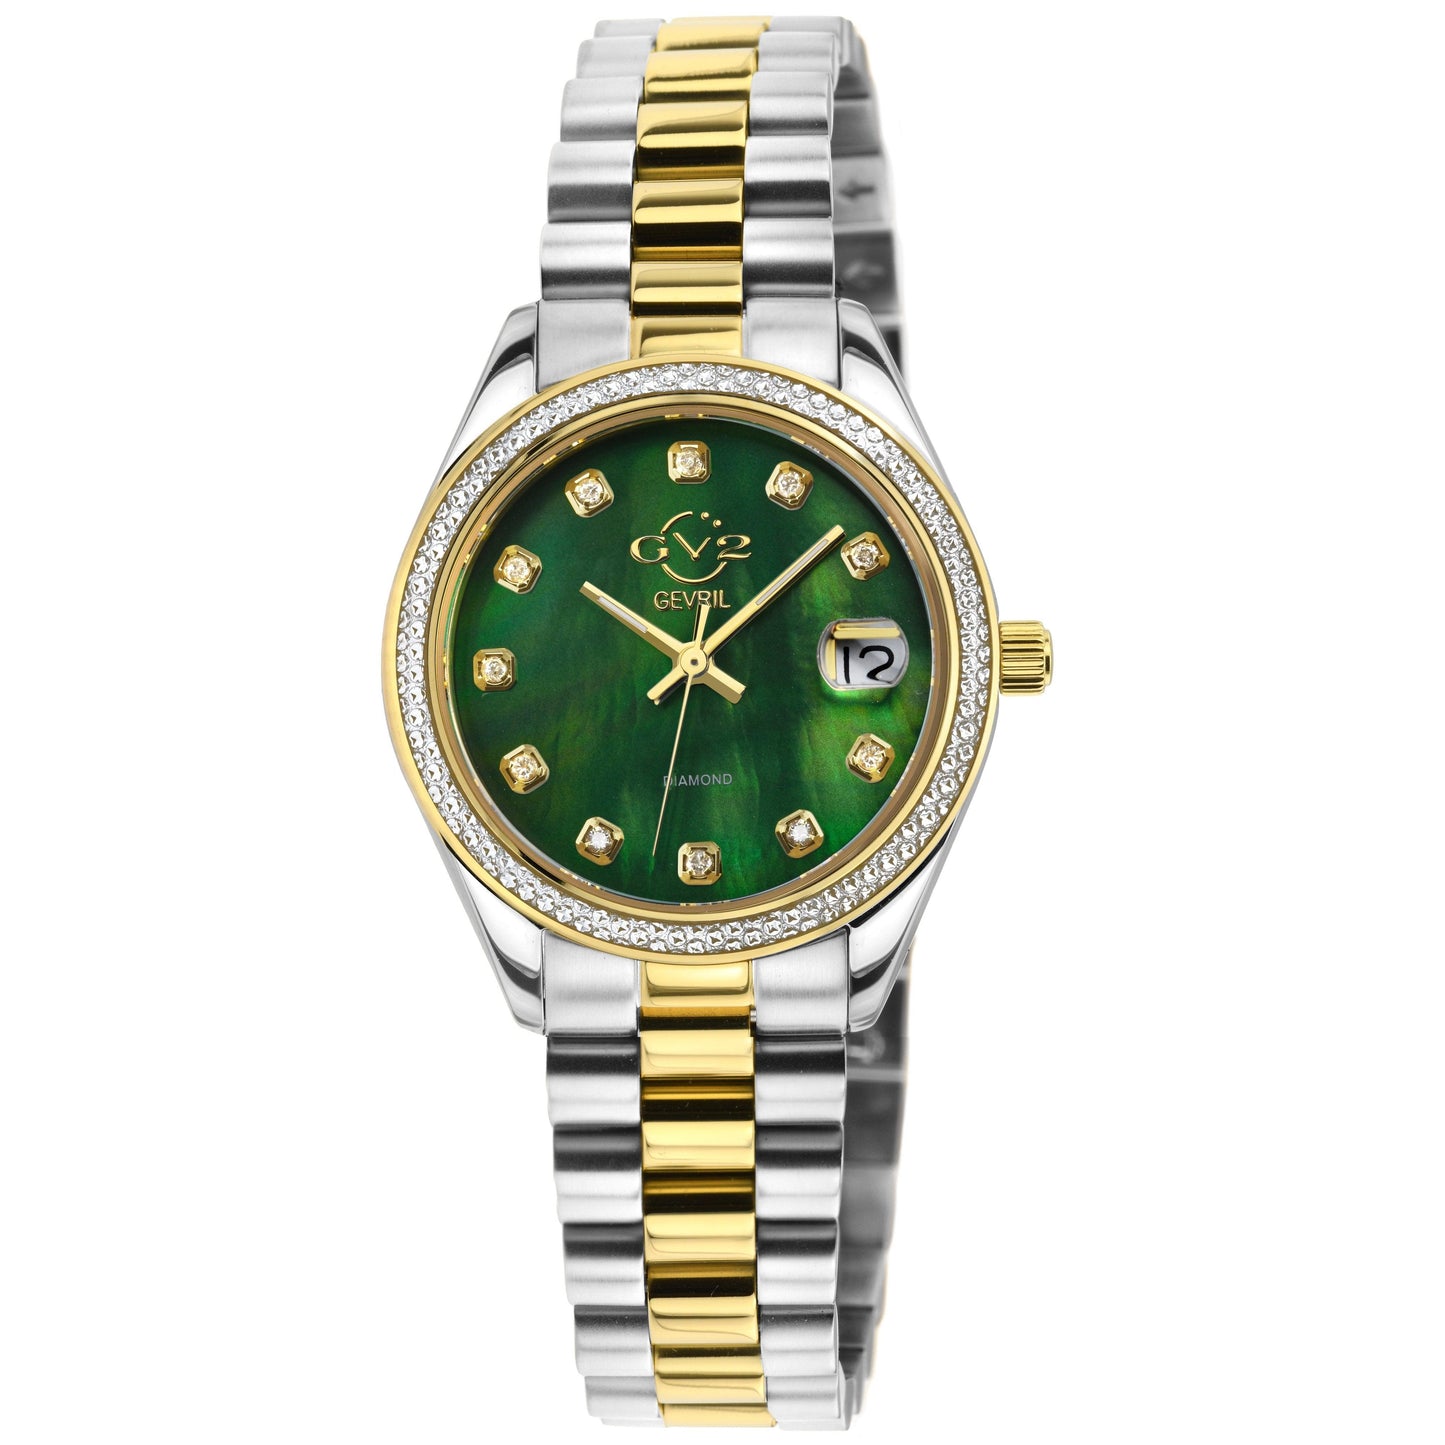 Gevril-Luxury-Swiss-Watches-GV2 Turin Diamond-12428B